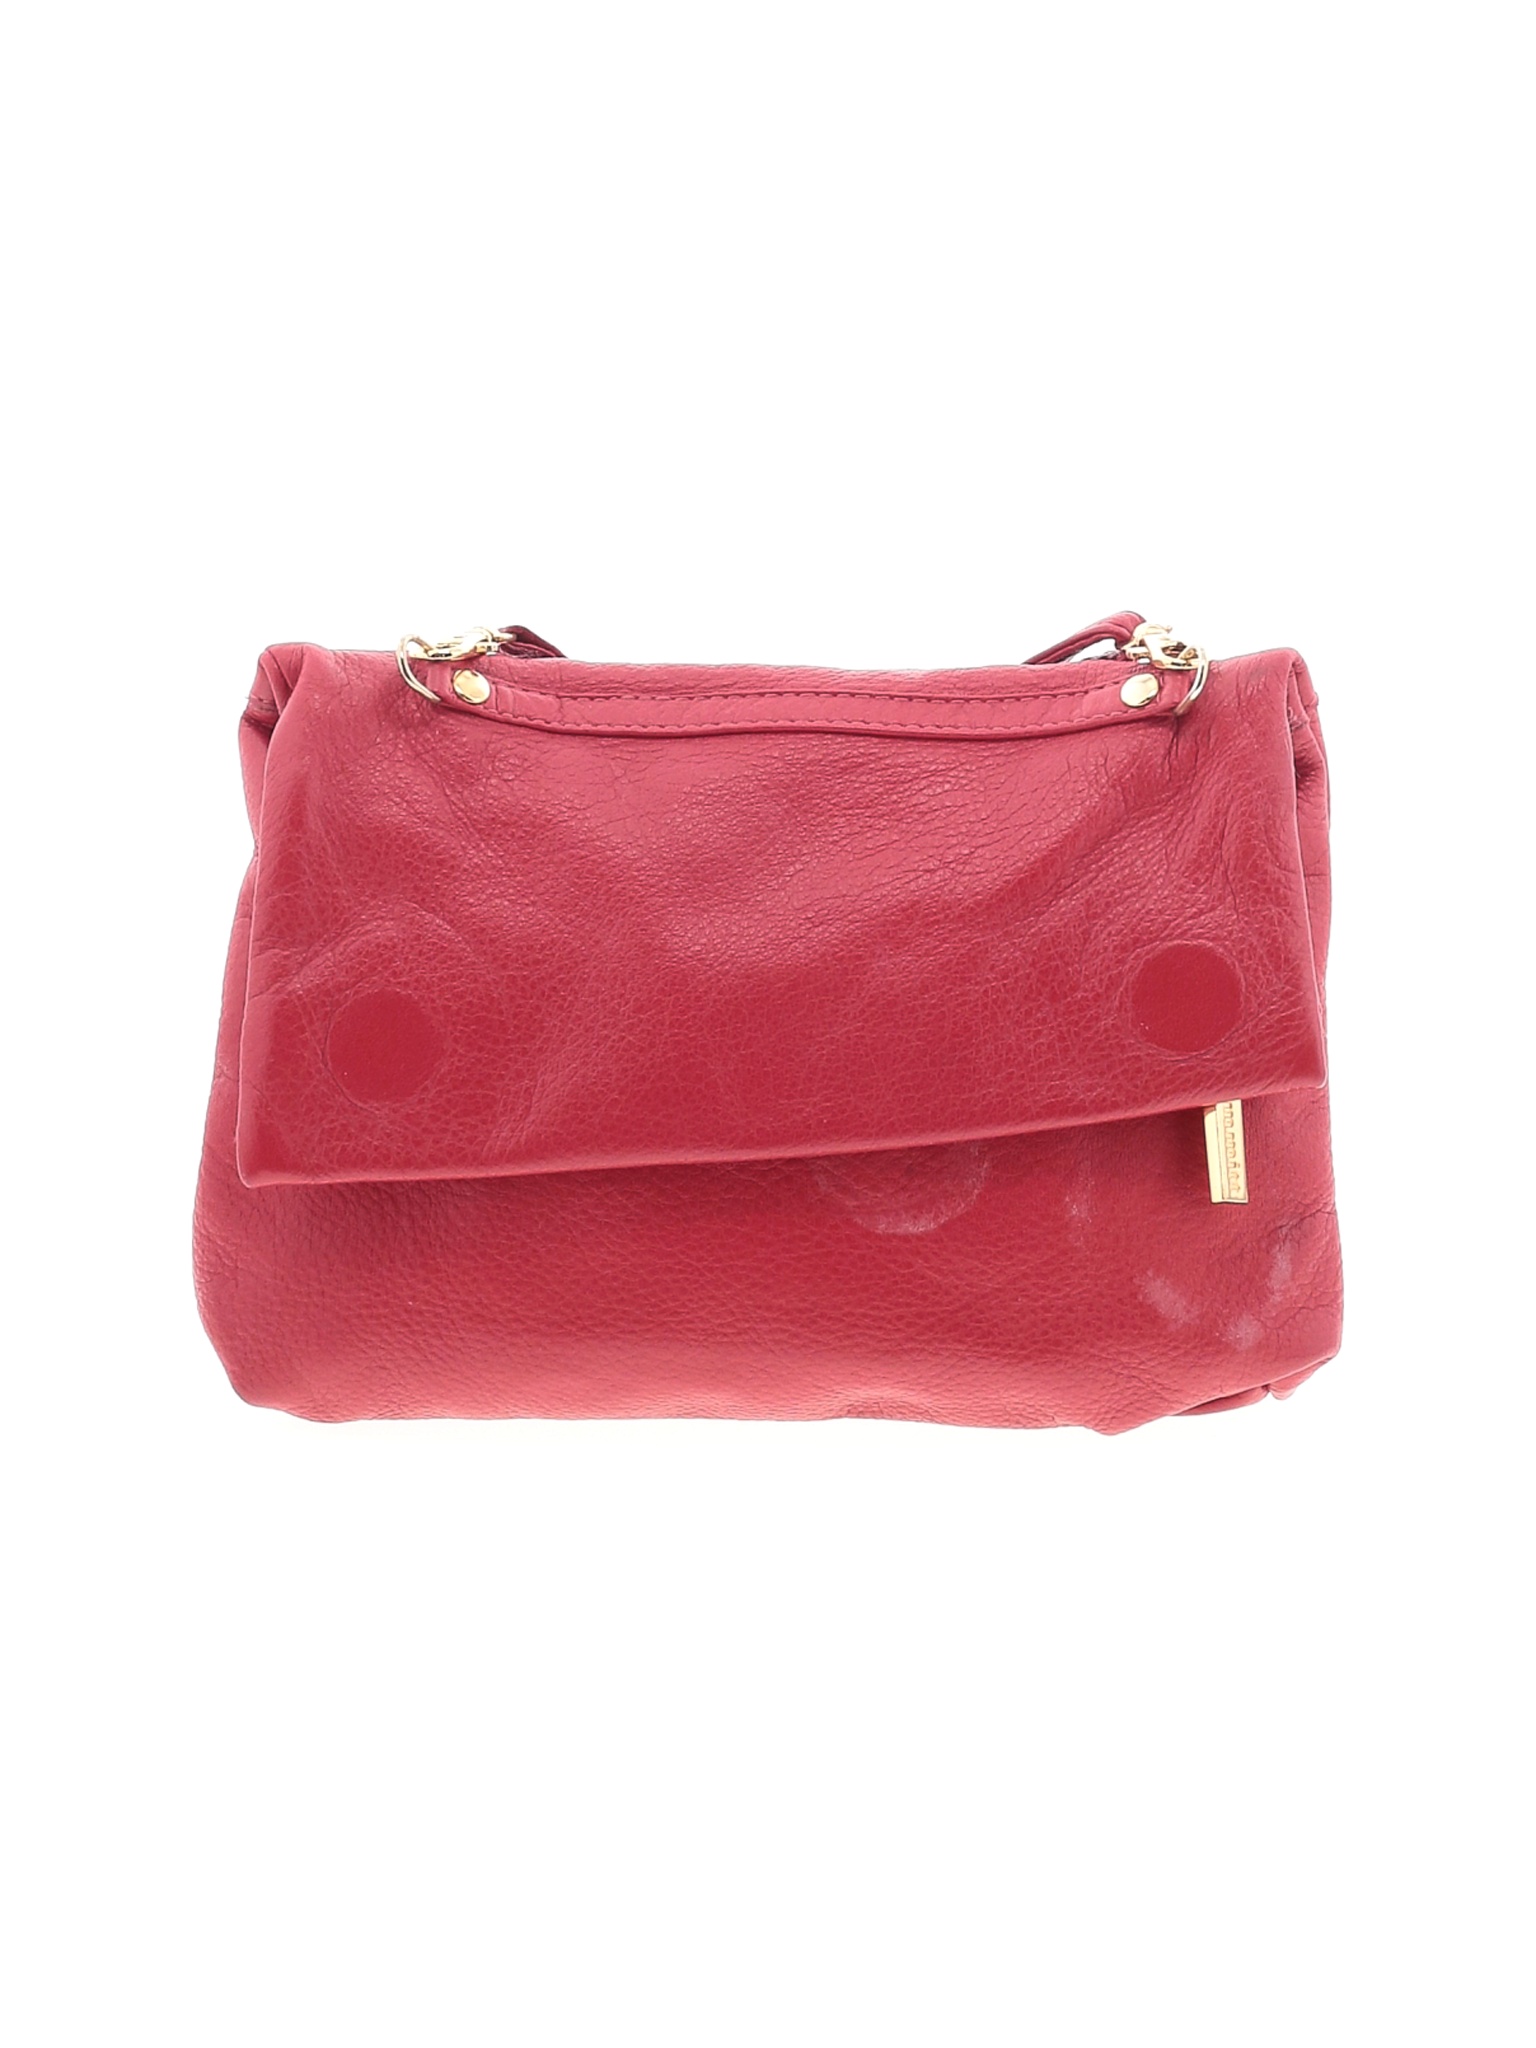 Hammitt Women Red Leather Crossbody Bag One Size | eBay